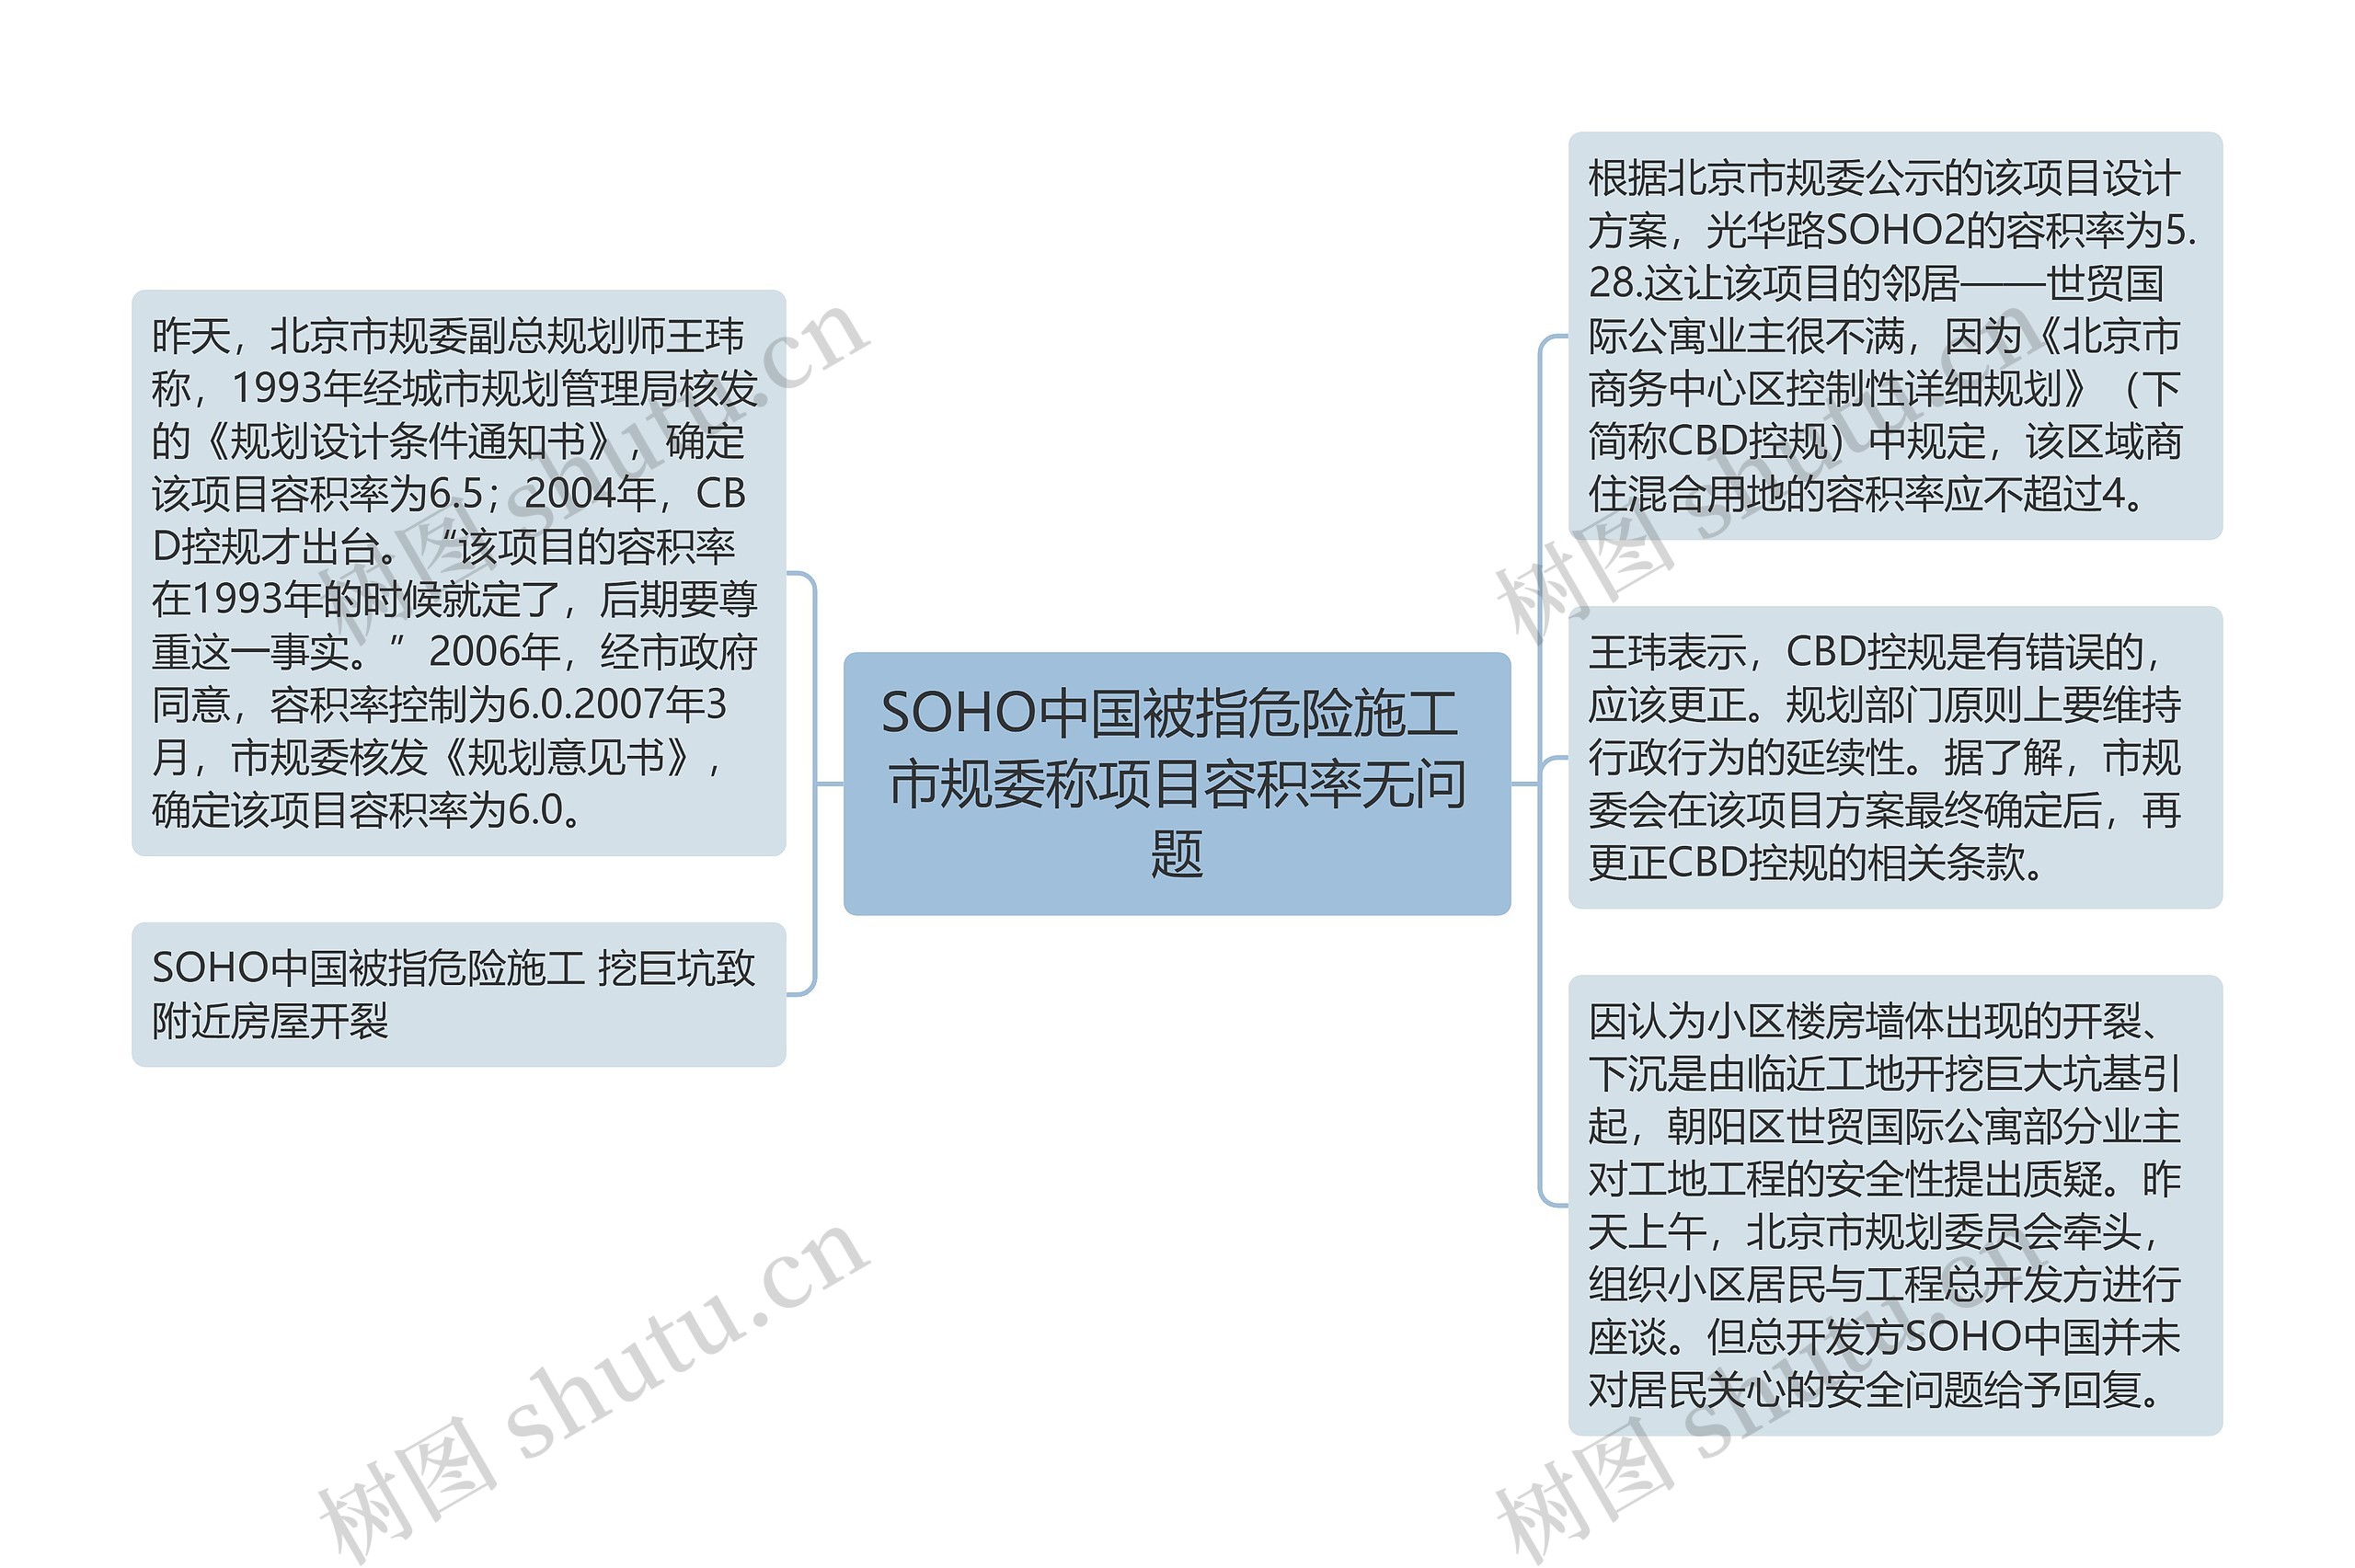 SOHO中国被指危险施工 市规委称项目容积率无问题思维导图